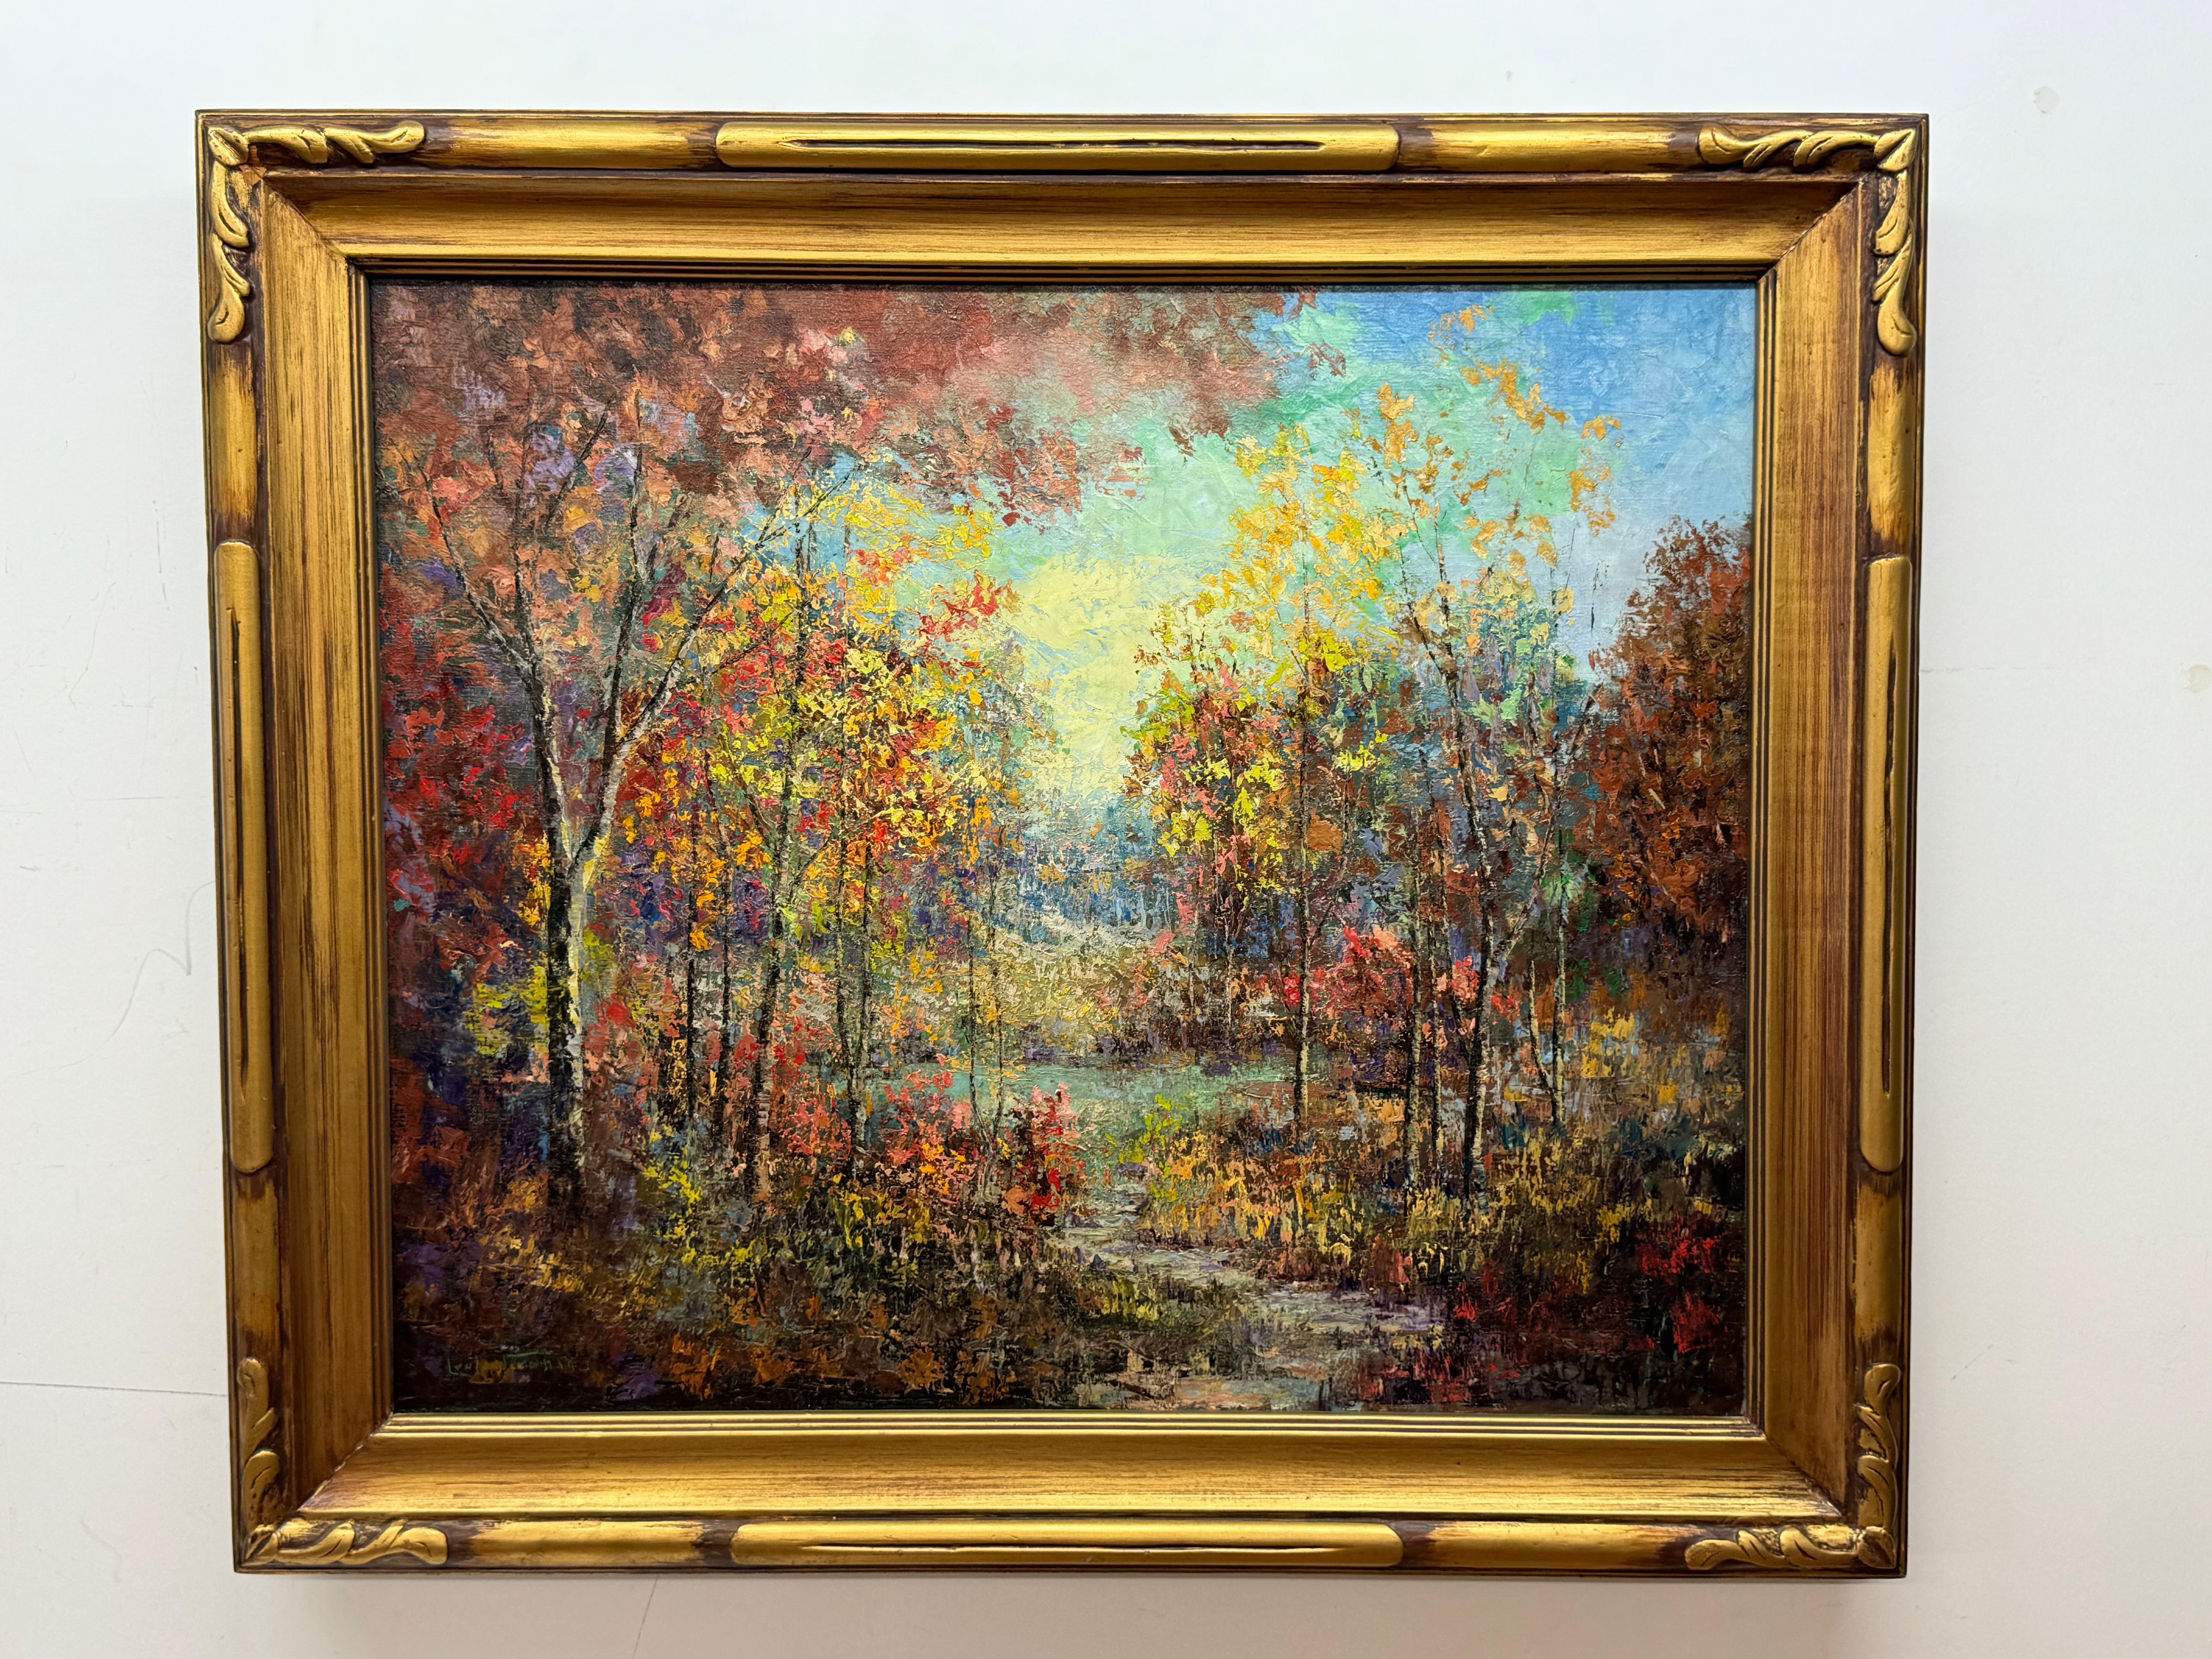 Leola Freeman (1900-1989) 

Texas Artist 

Beautiful fall abstract, forest scene, painting

Oil on canvas

25 x 30 unframed, 31 x 36 framed
